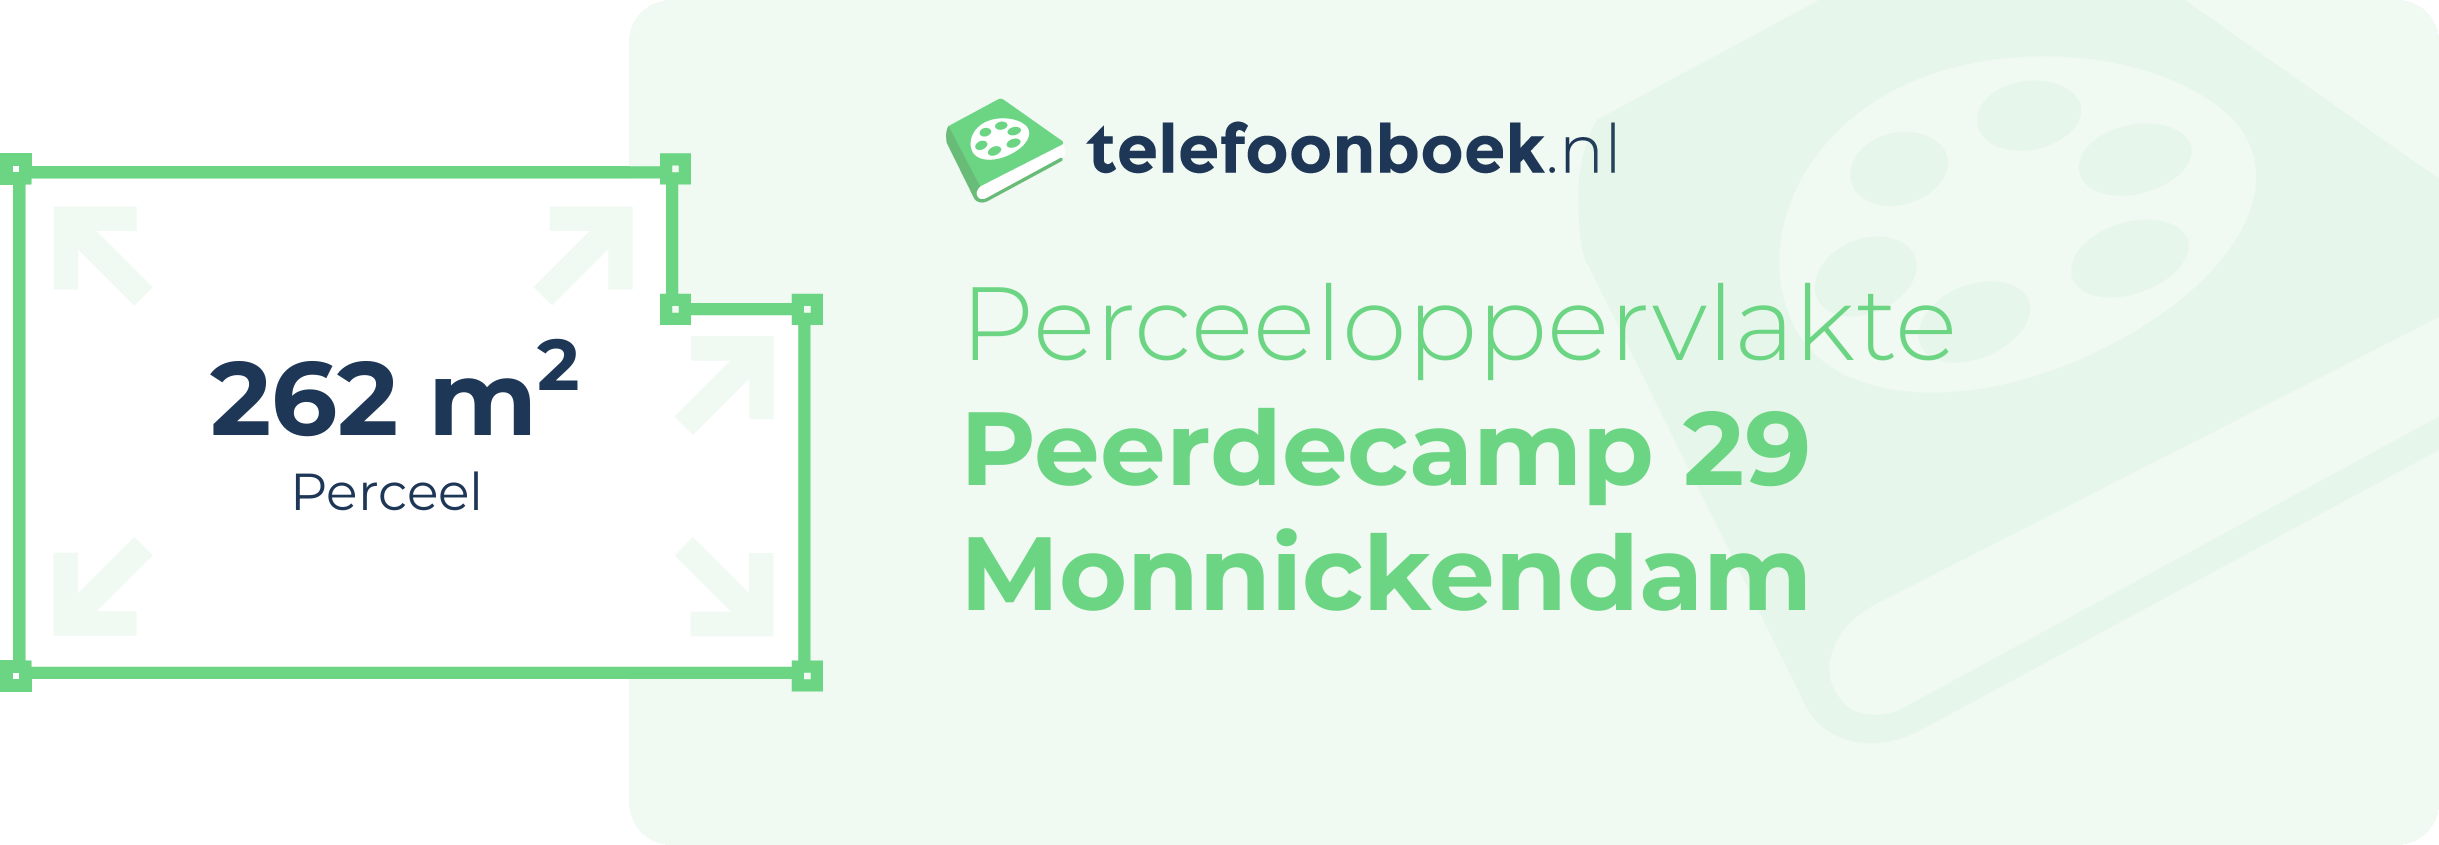 Perceeloppervlakte Peerdecamp 29 Monnickendam